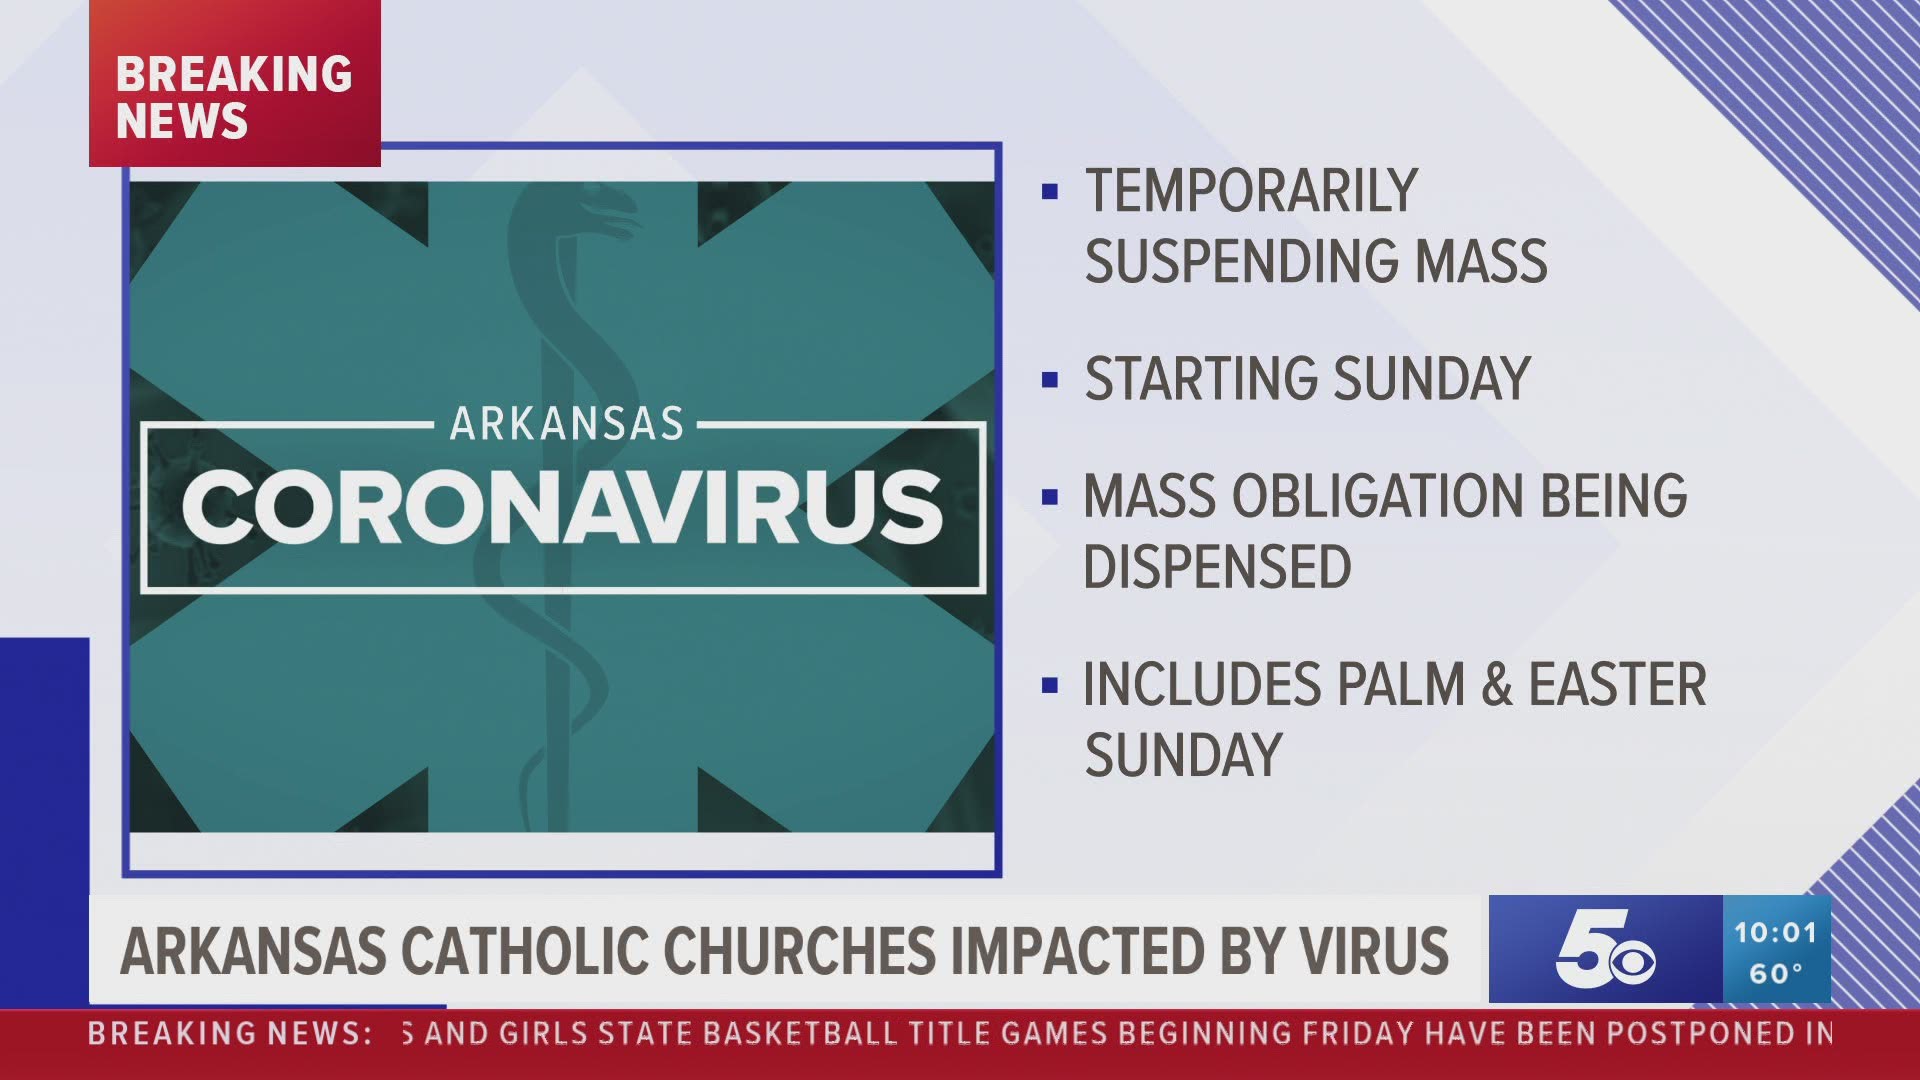 Arkansas Catholic Churches impacted by coronavirus